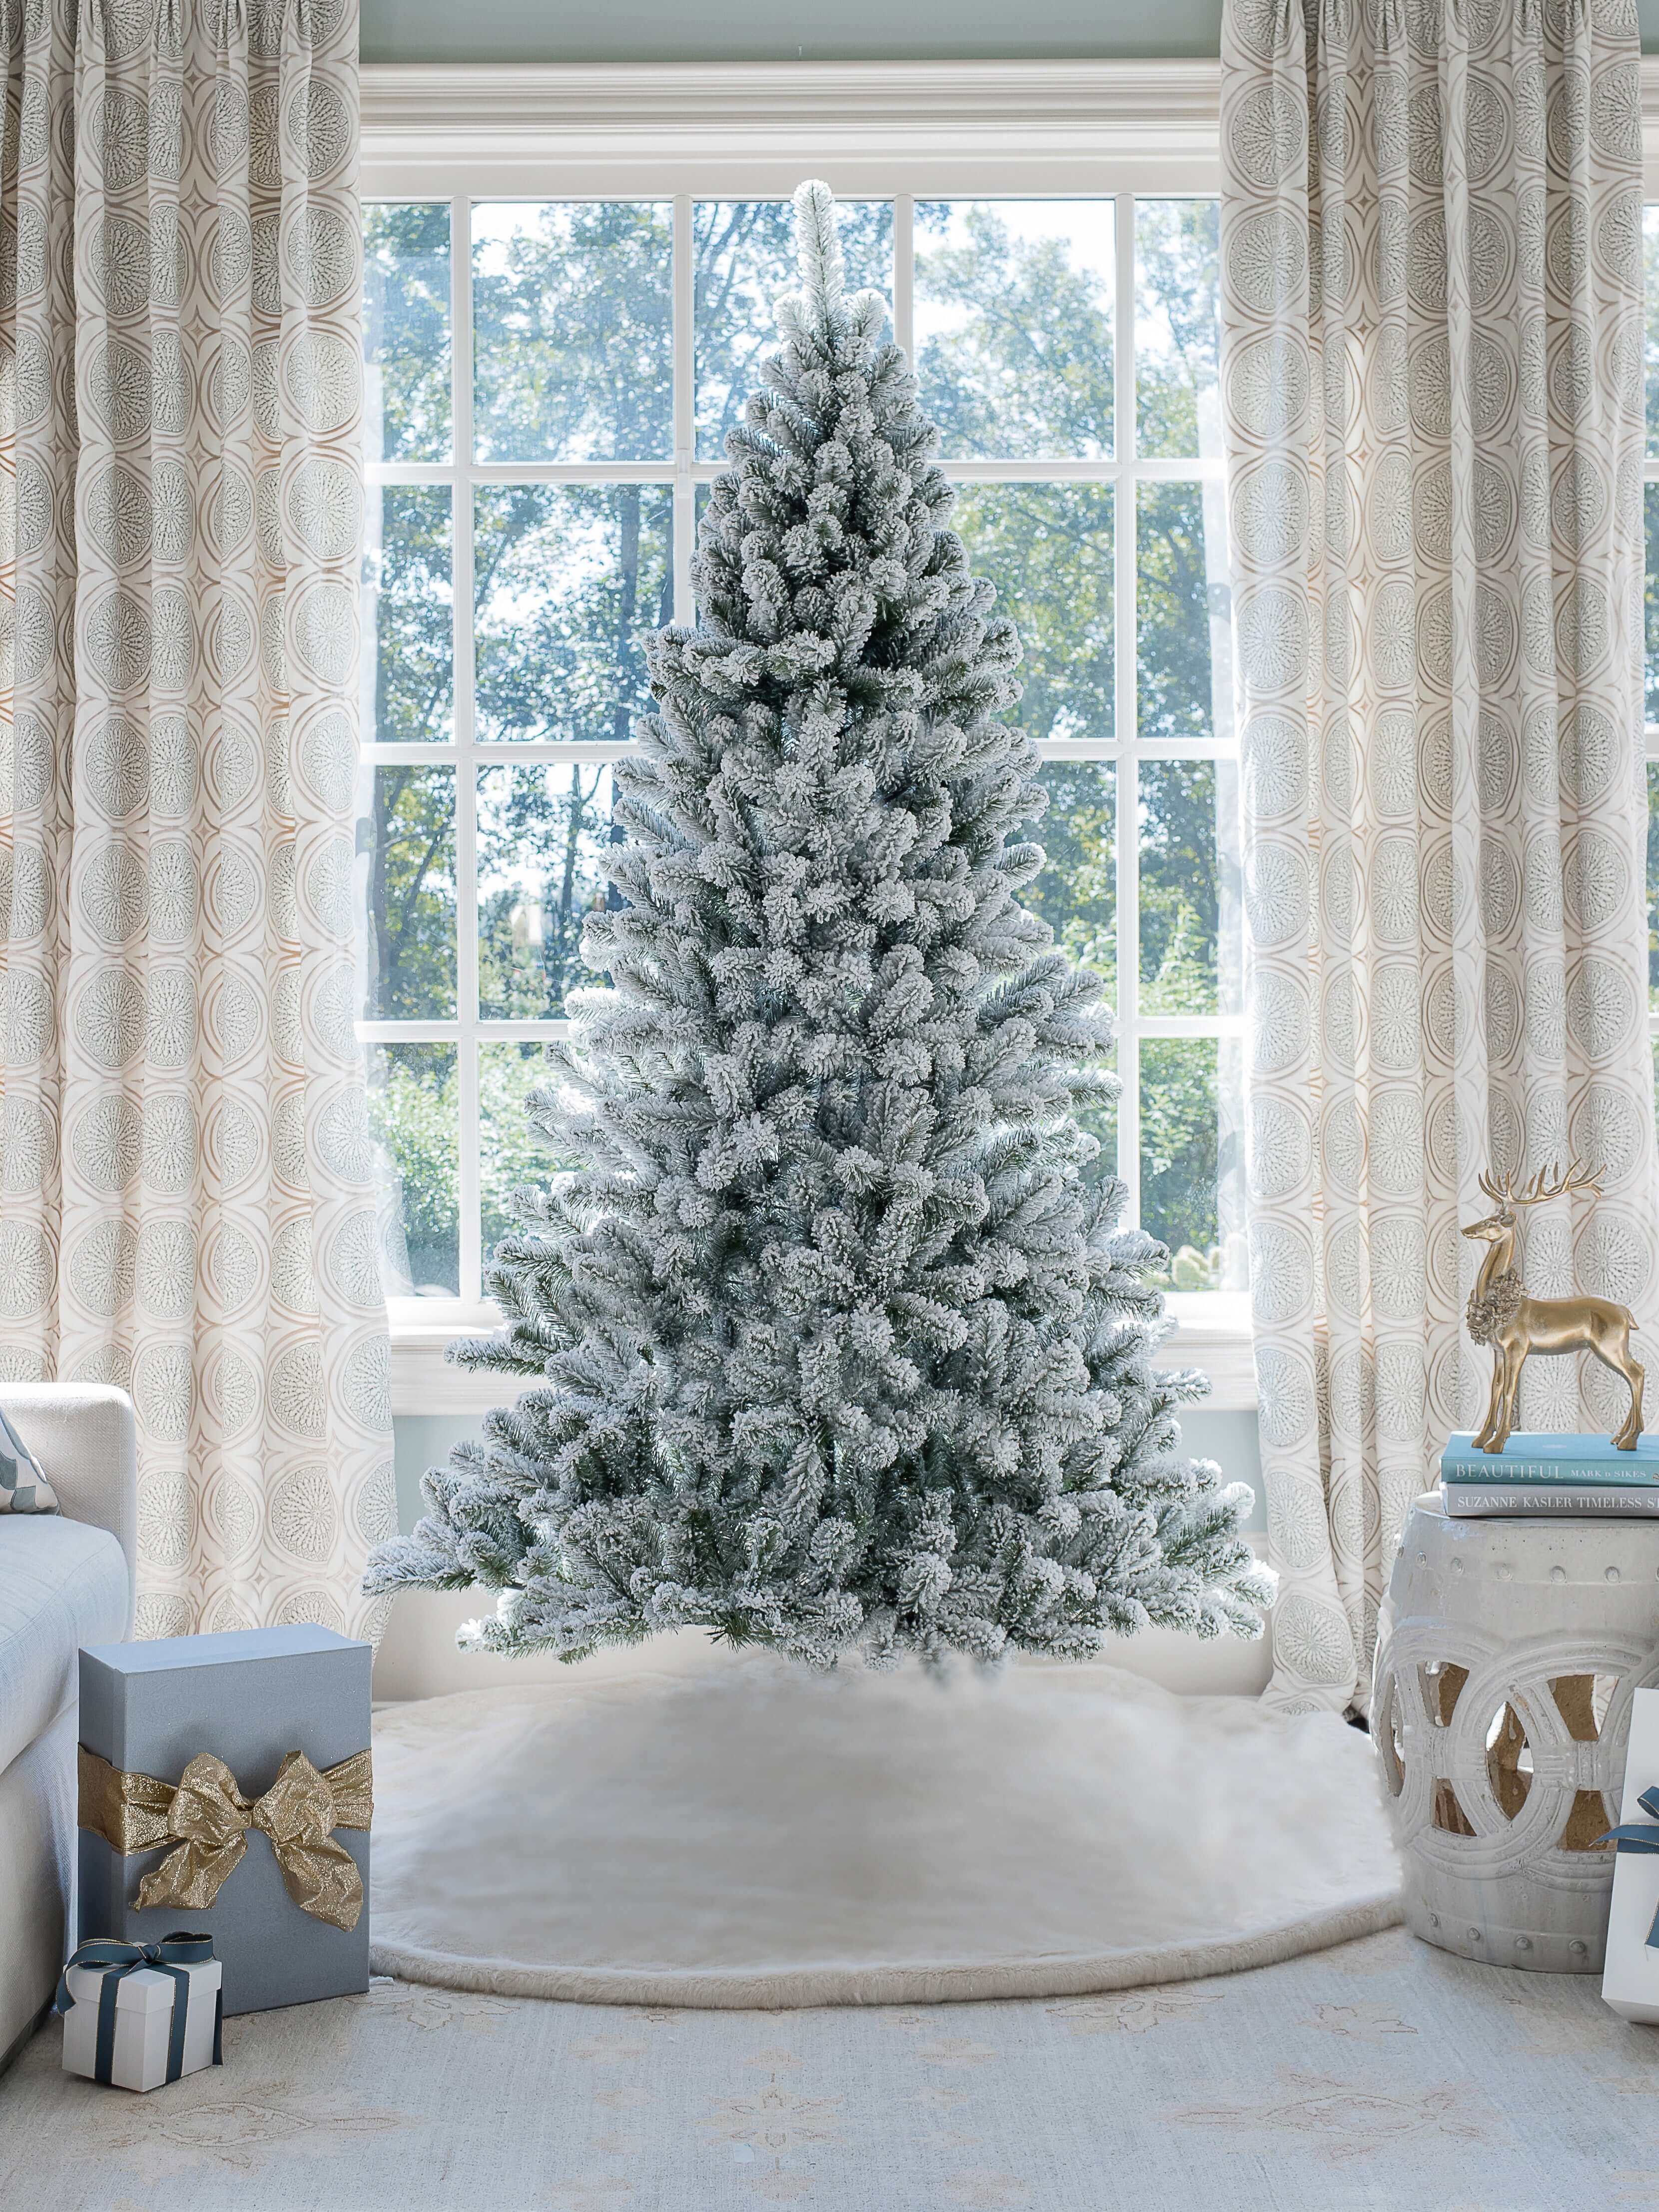 King of Christmas 9' Prince Flock® Artificial Christmas Tree Unlit